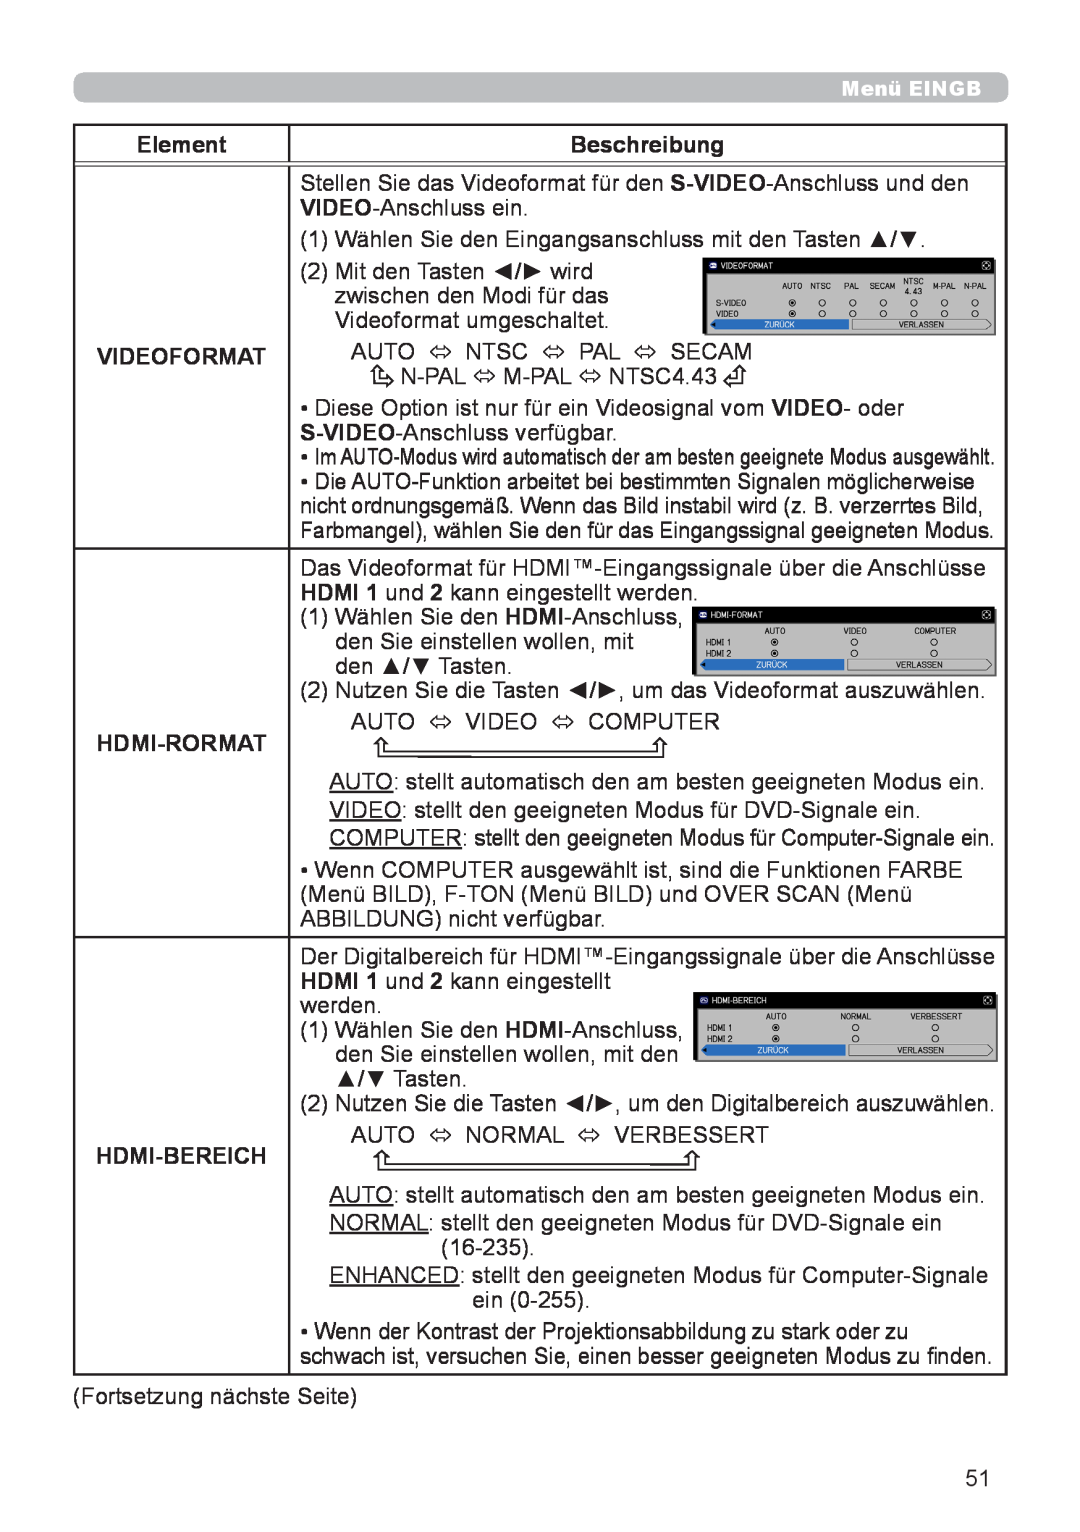 InFocus IN5132 user manual Element, Beschreibung, Hdmi-Rormat, Hdmi-Bereich 